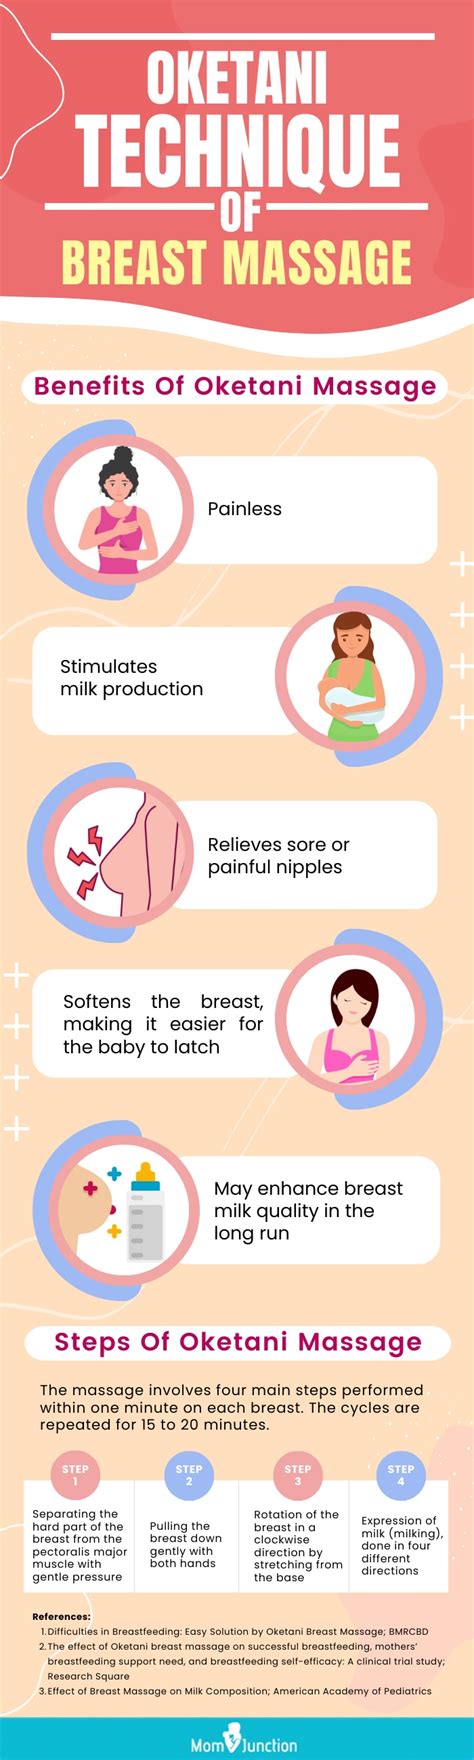 5 Benefits Of Lactation Massage For Breastfeeding Moms